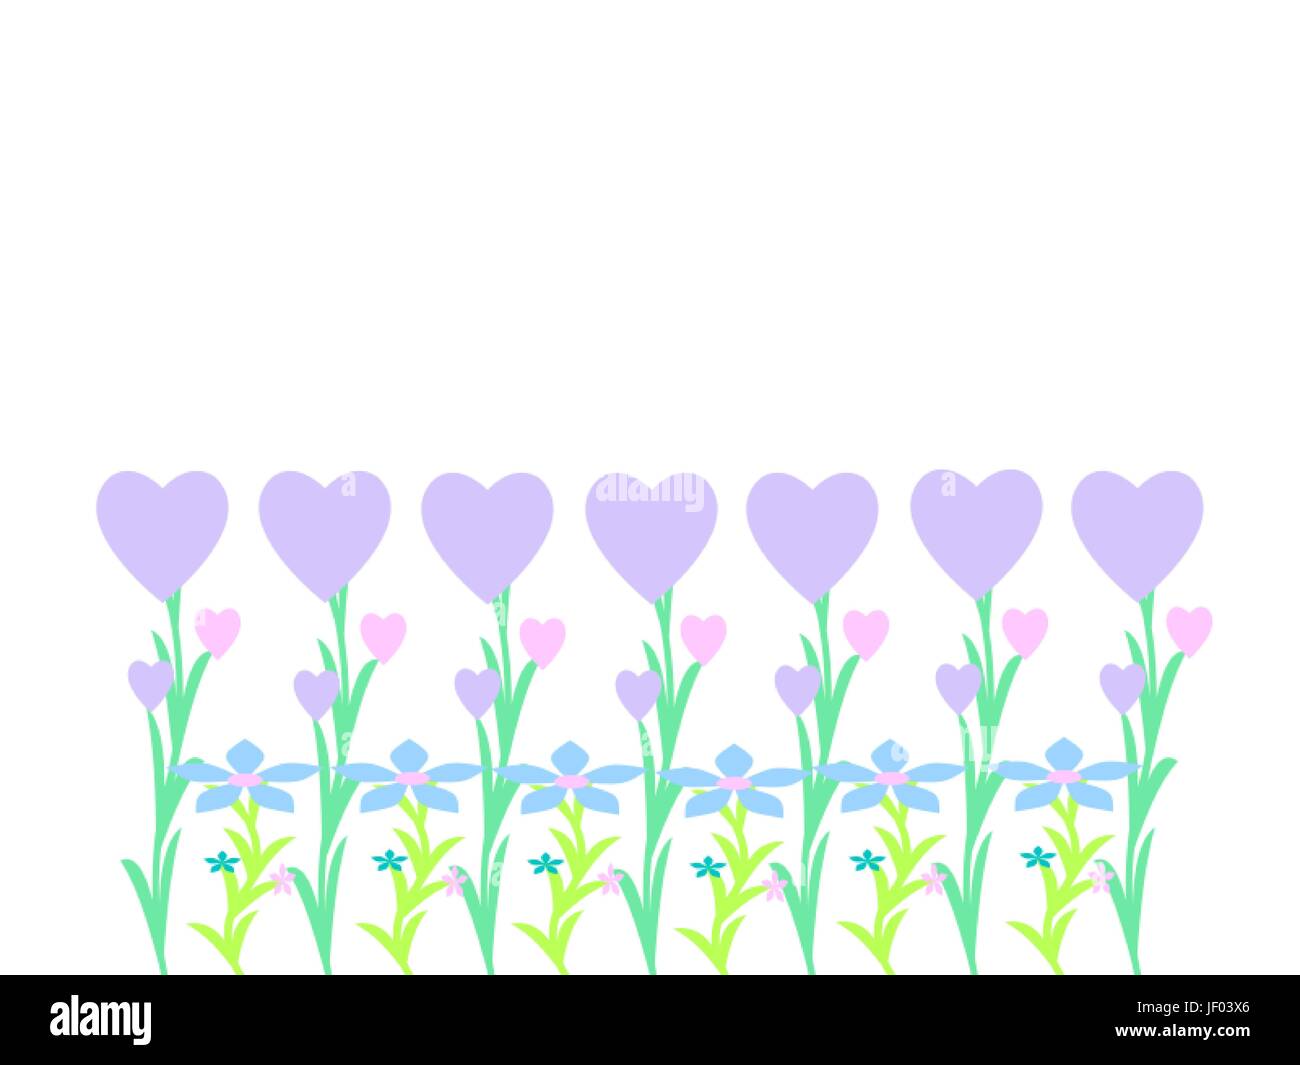 row, hearts, vector, replication, reproduction, art, colour, flower, plant, Stock Vector